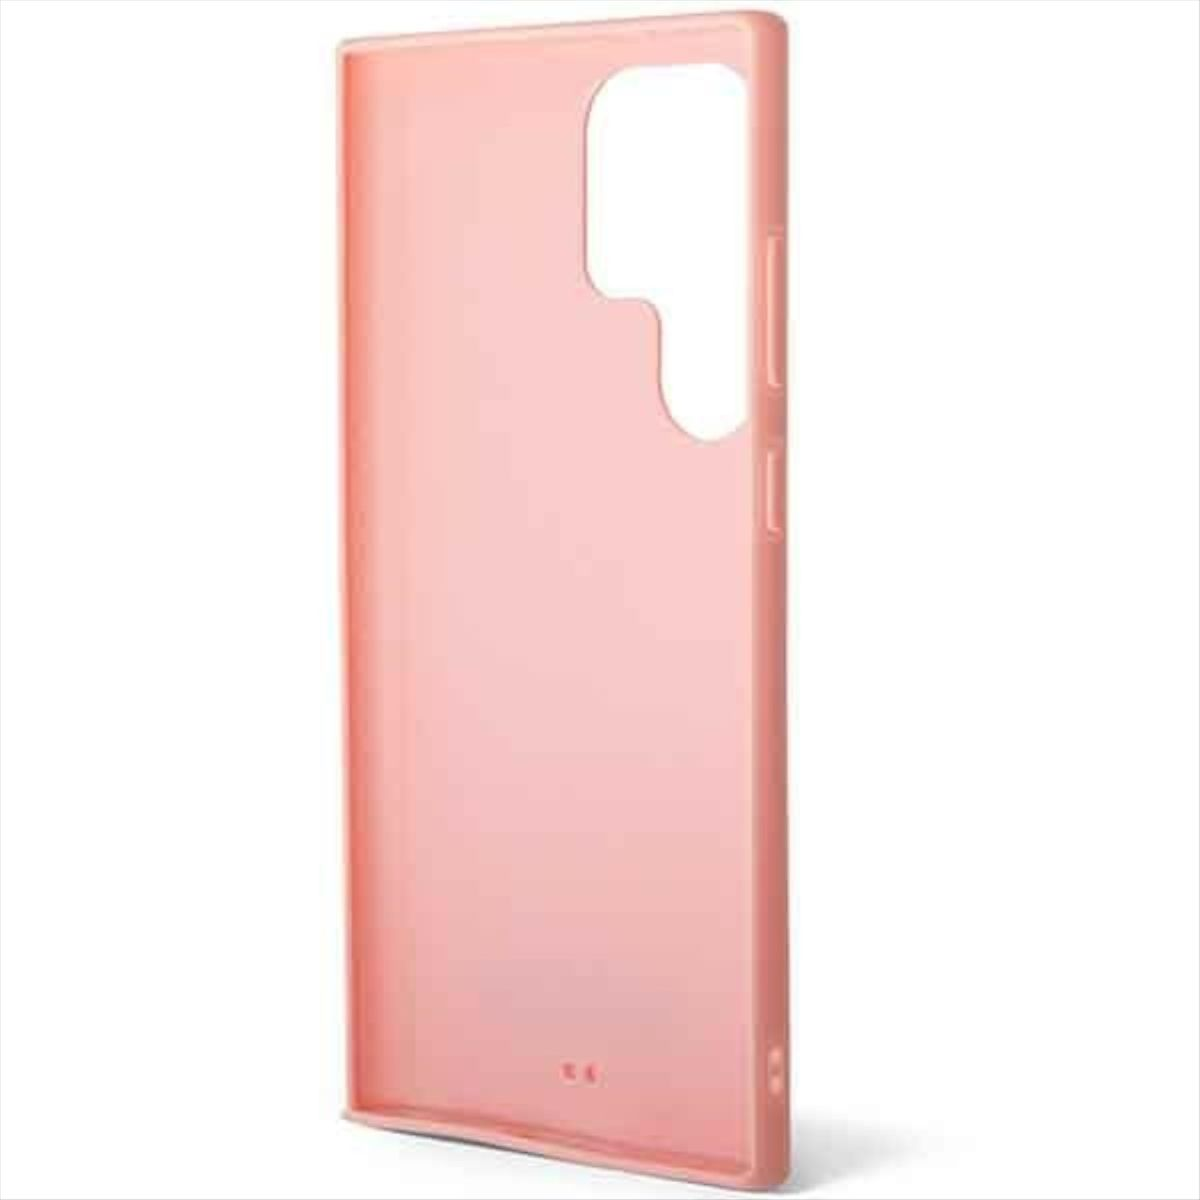 KARL LAGERFELD 3D Galaxy Ultra, Monogram Samsung, Design Pink Hülle, Backcover, S23